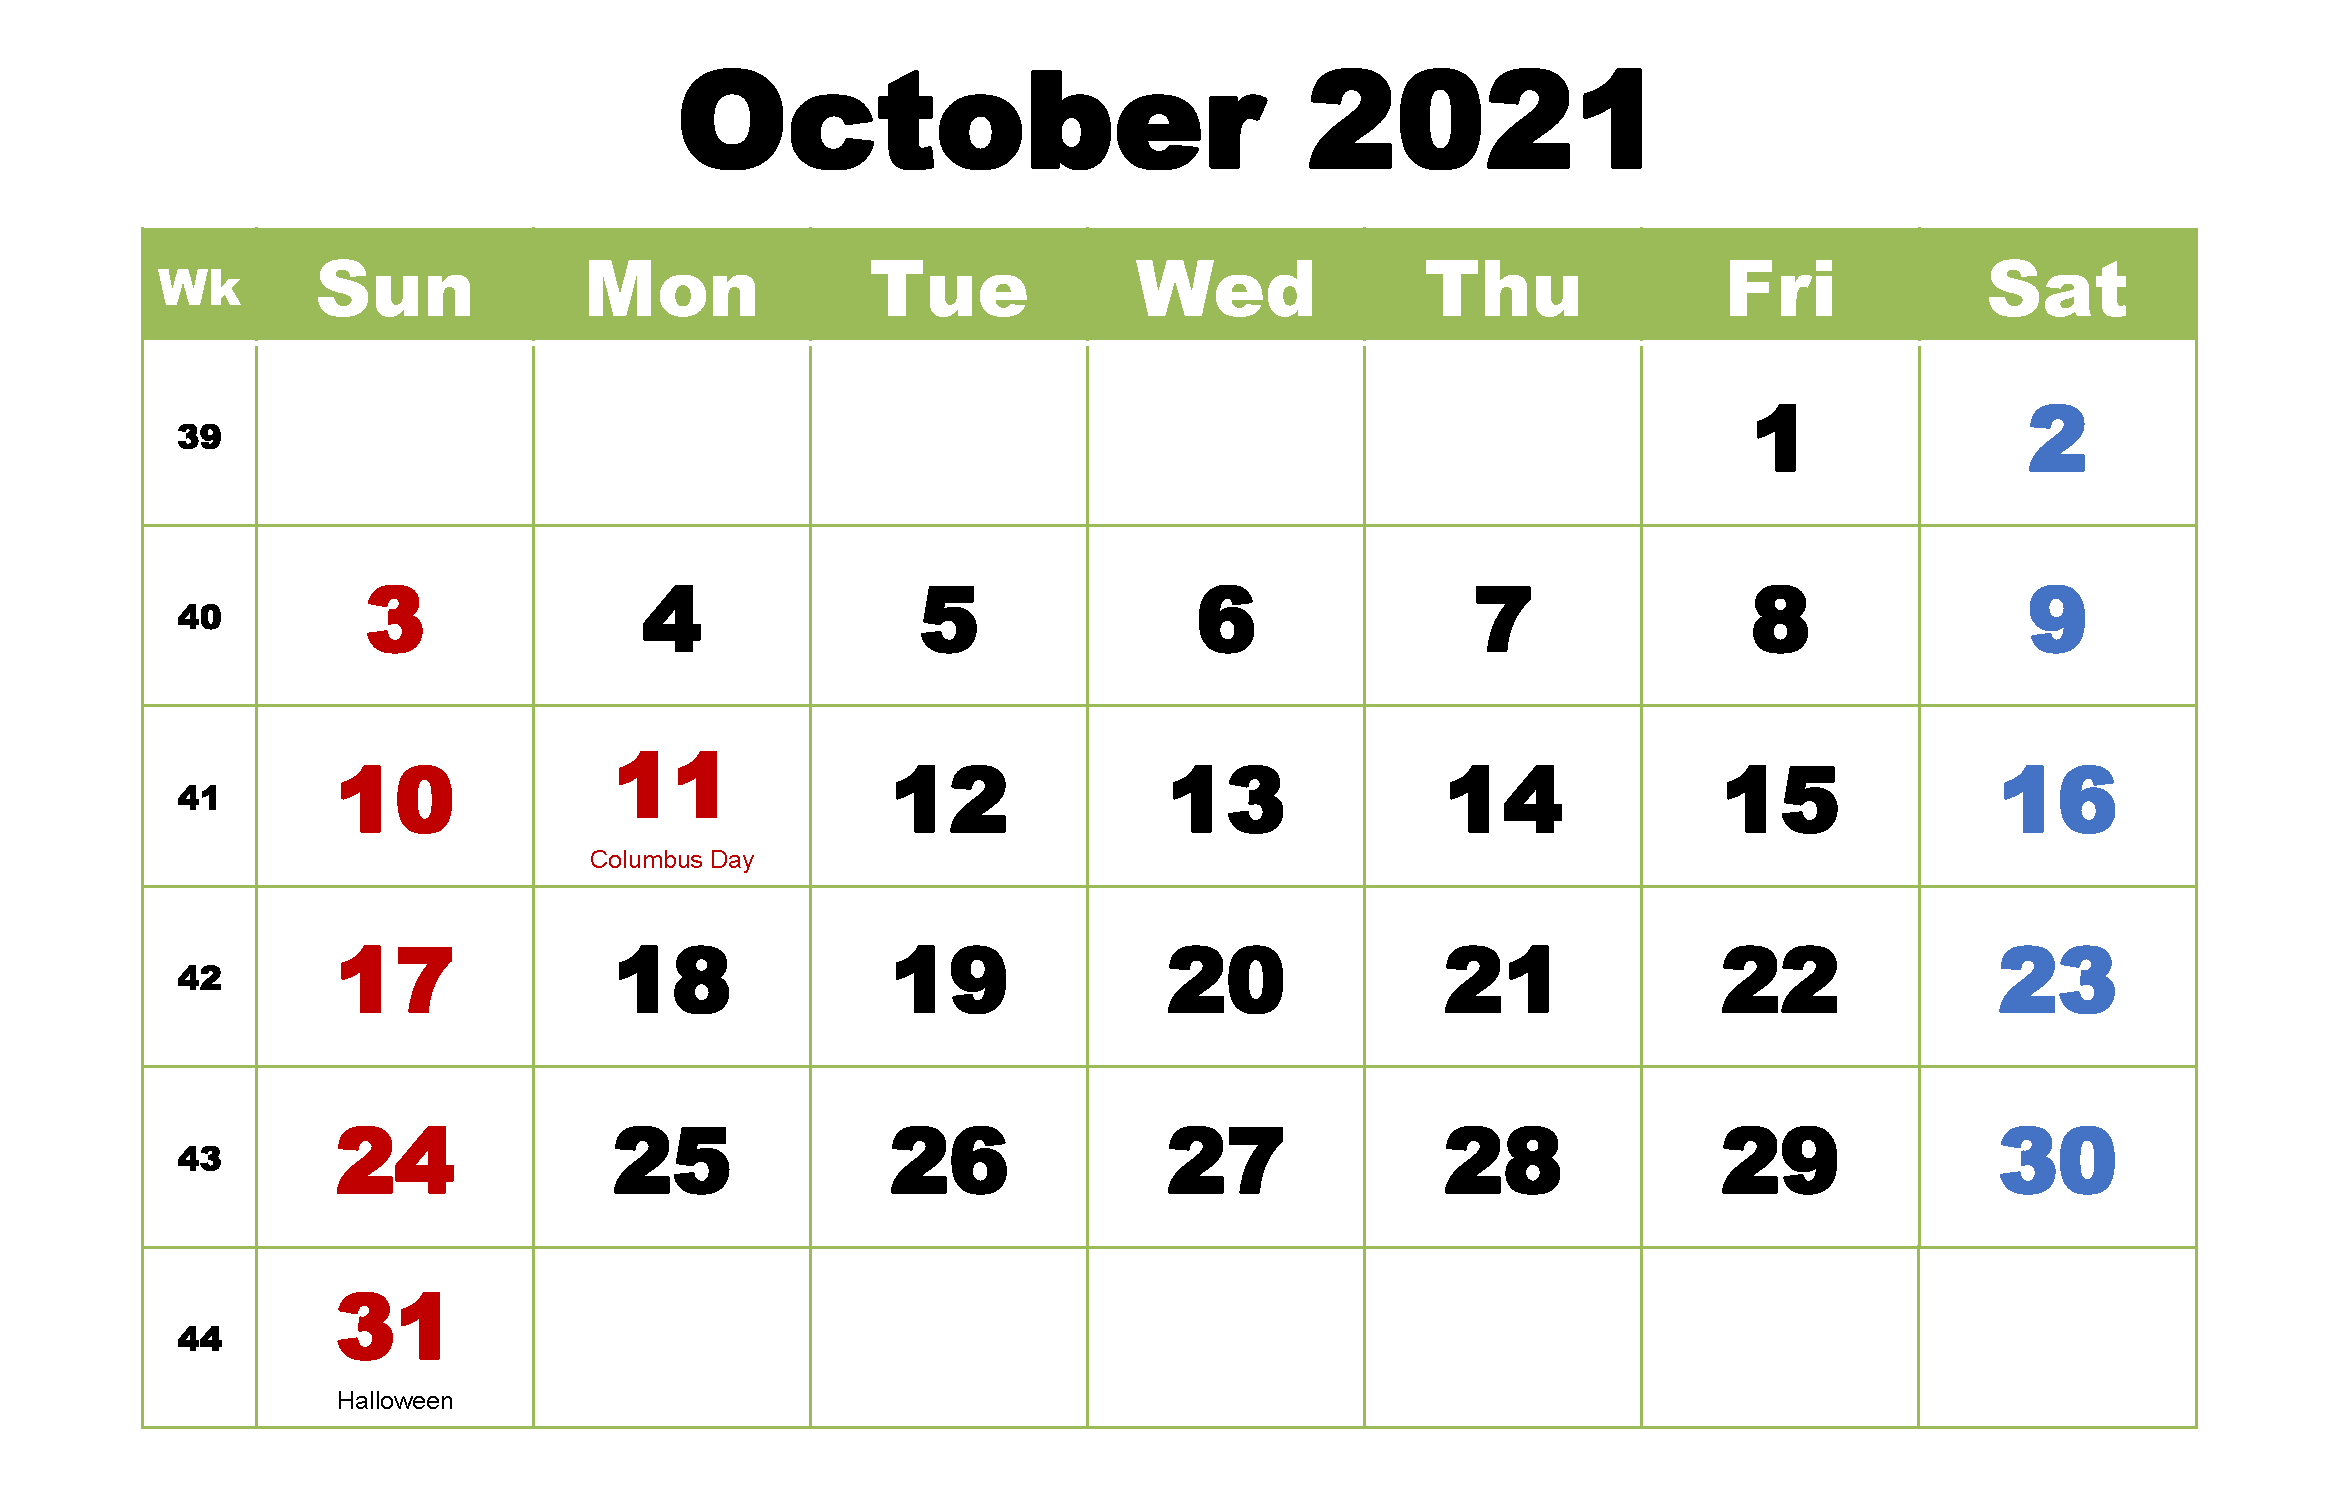 October 2021 Holidays Calendar